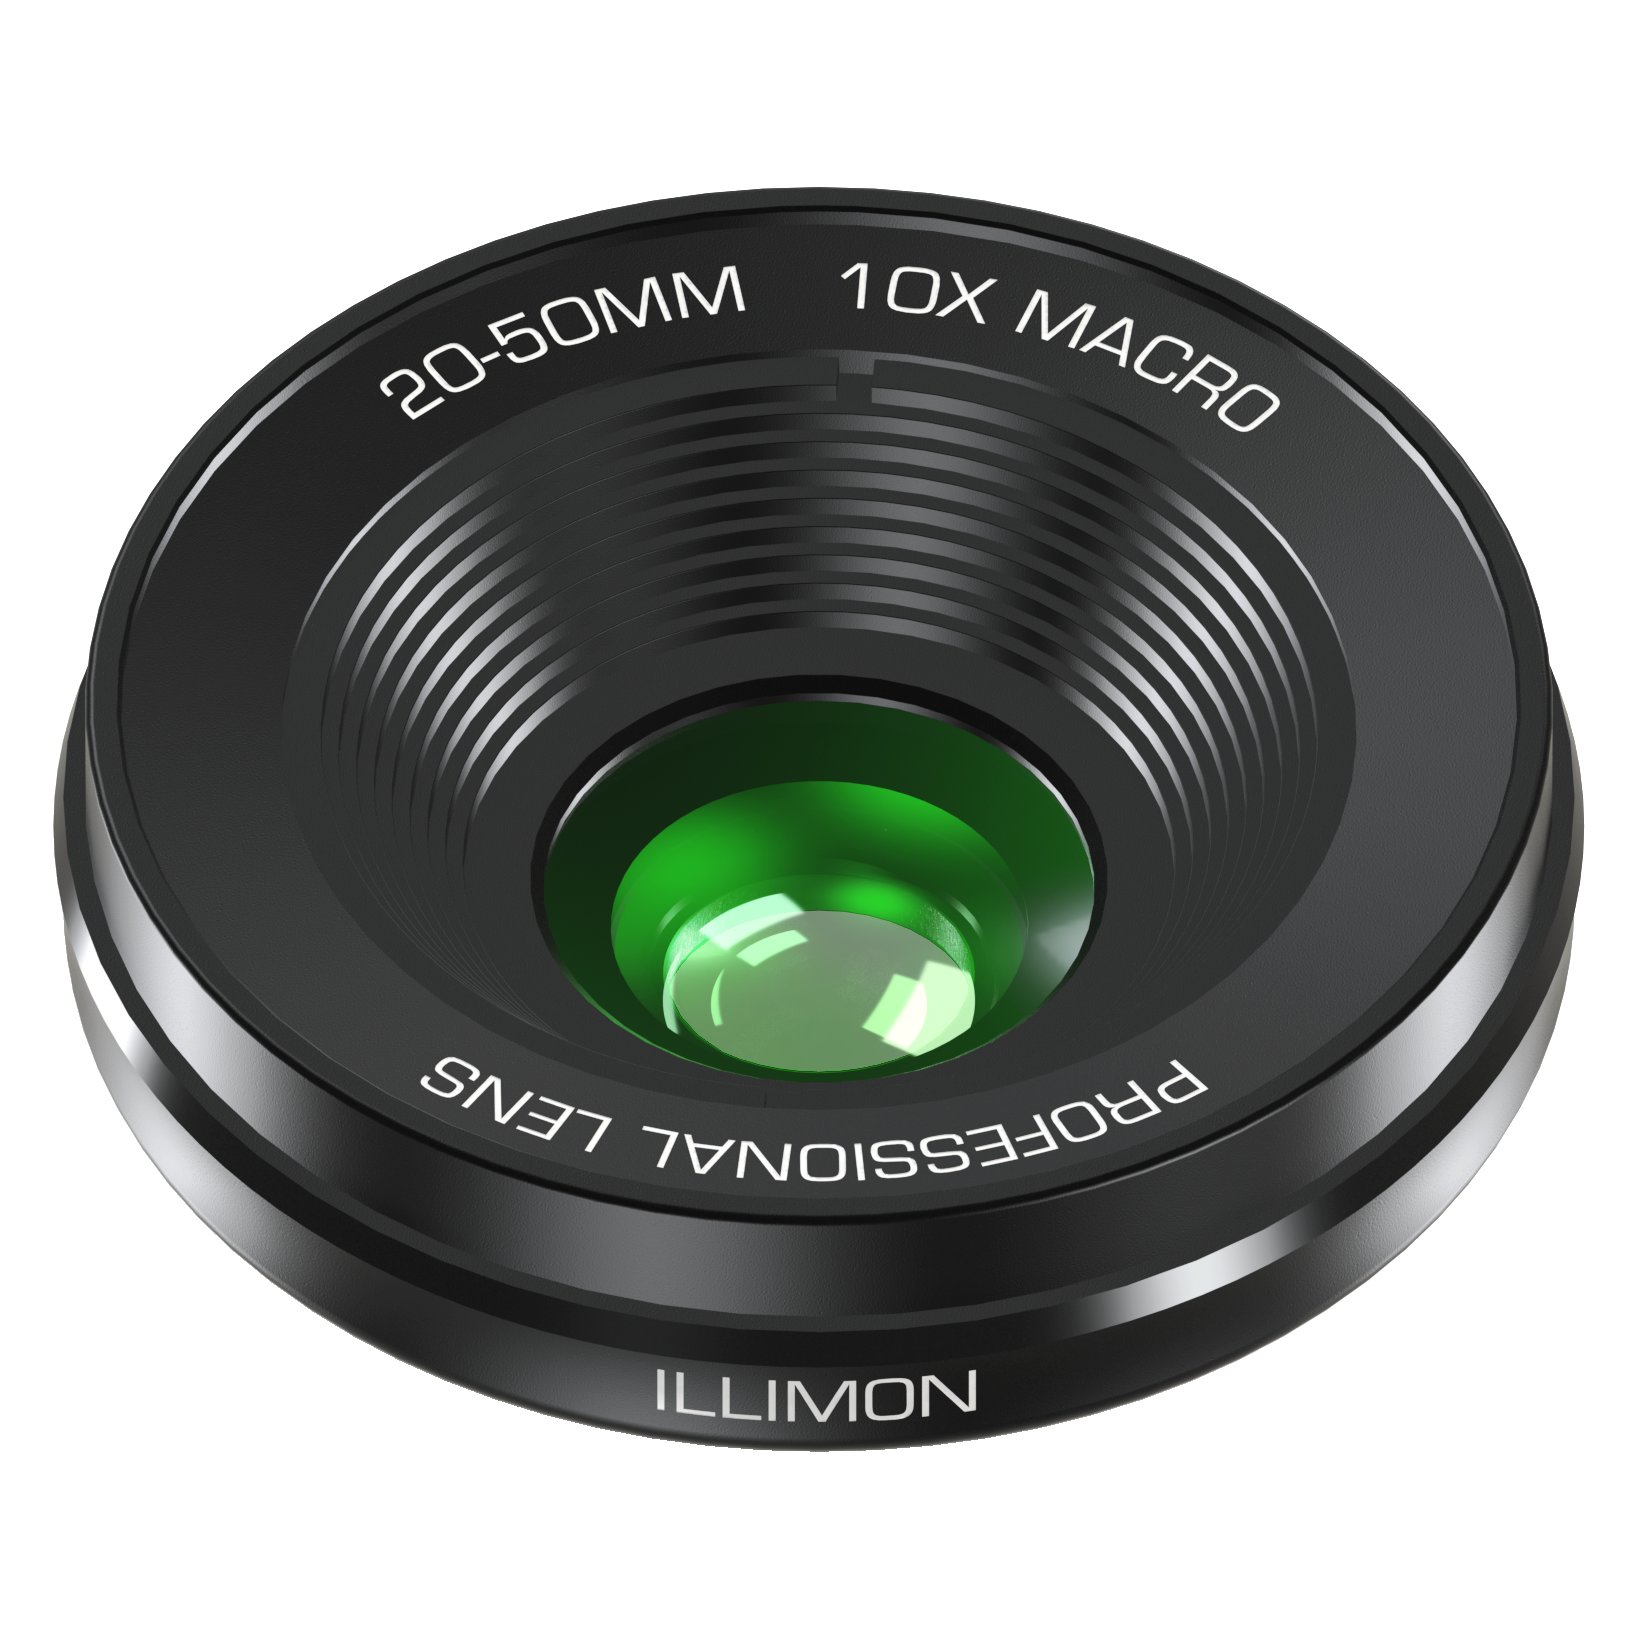 Macro Camera Lens for iPhone Smartphone Samsung | Selfie Camera Lens ...